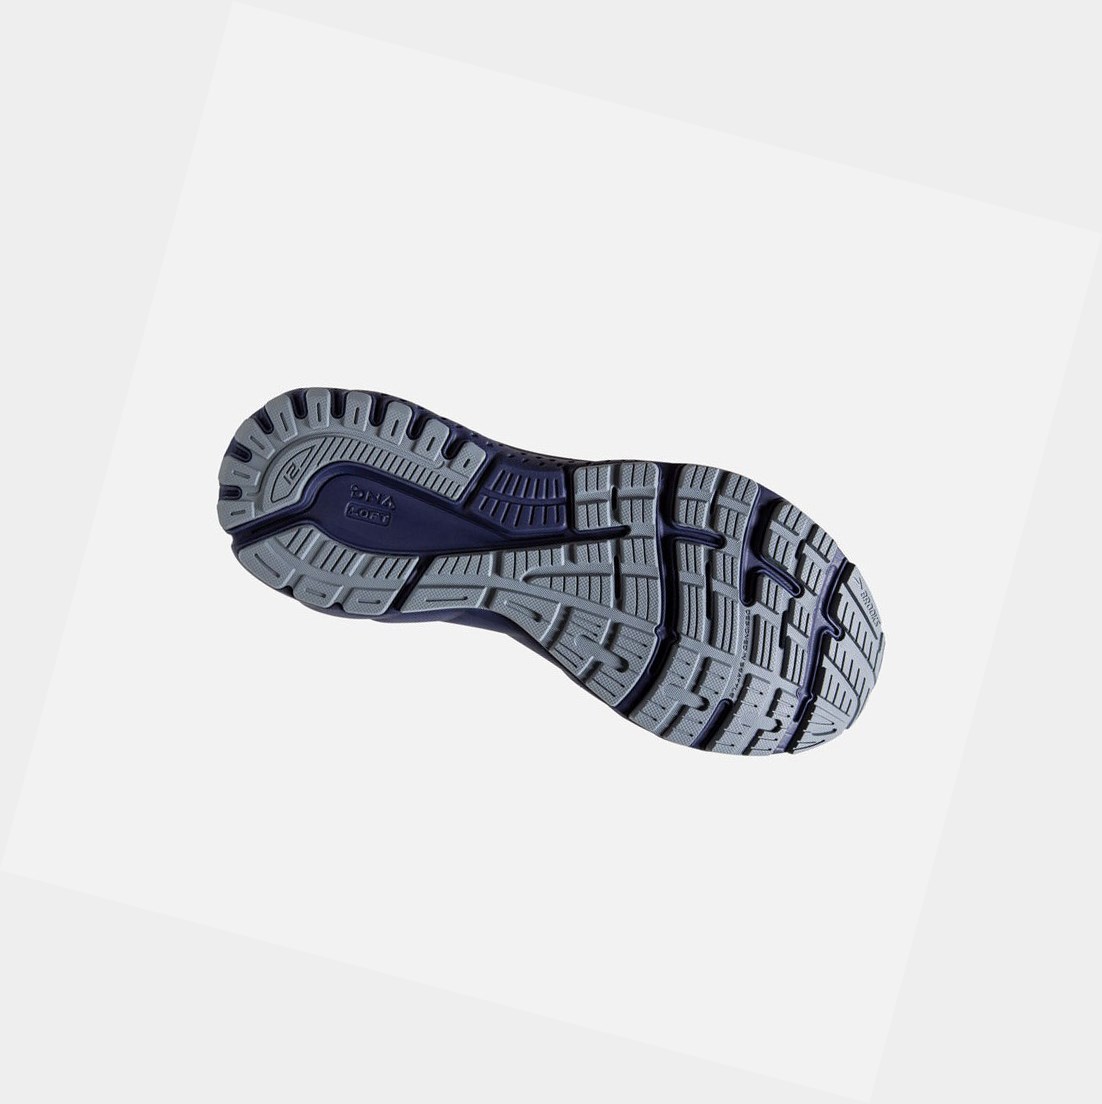 Brooks Adrenaline GTS 21 Men's Walking Shoes Grey / Tradewinds / Deep Cobalt | FCPU-06153